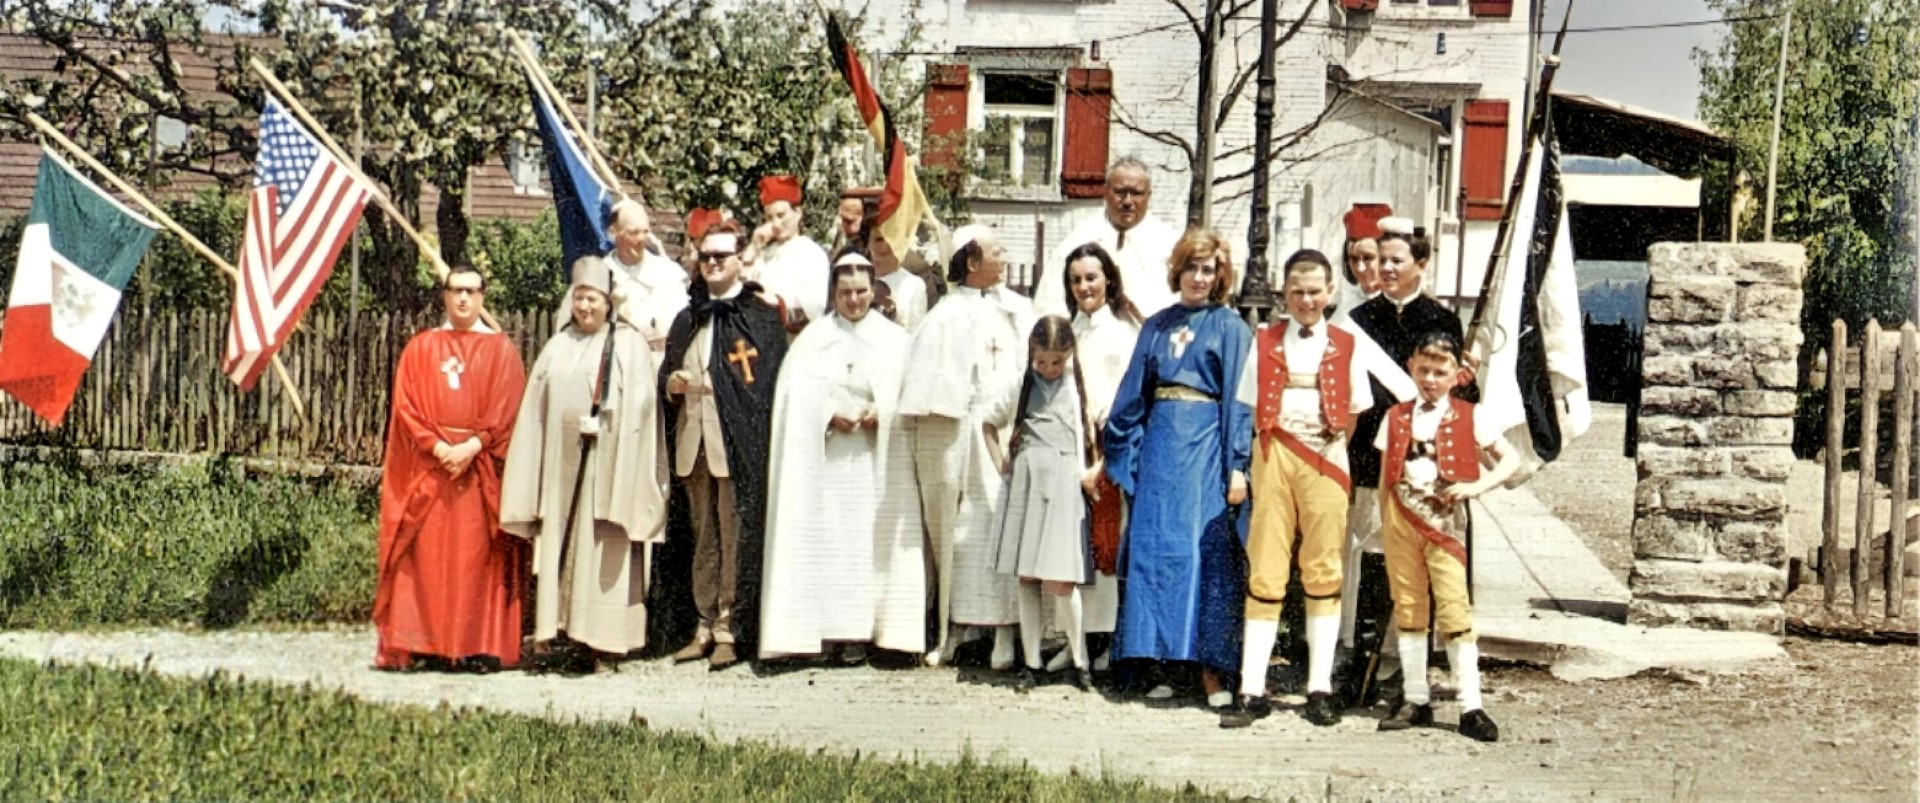 Ordo Templi Orientis in Switzerland, Stein Appenzell, Order of Illuminati, Gnostic Catholic Church, Fraternitas Rosicruciana Antiqua